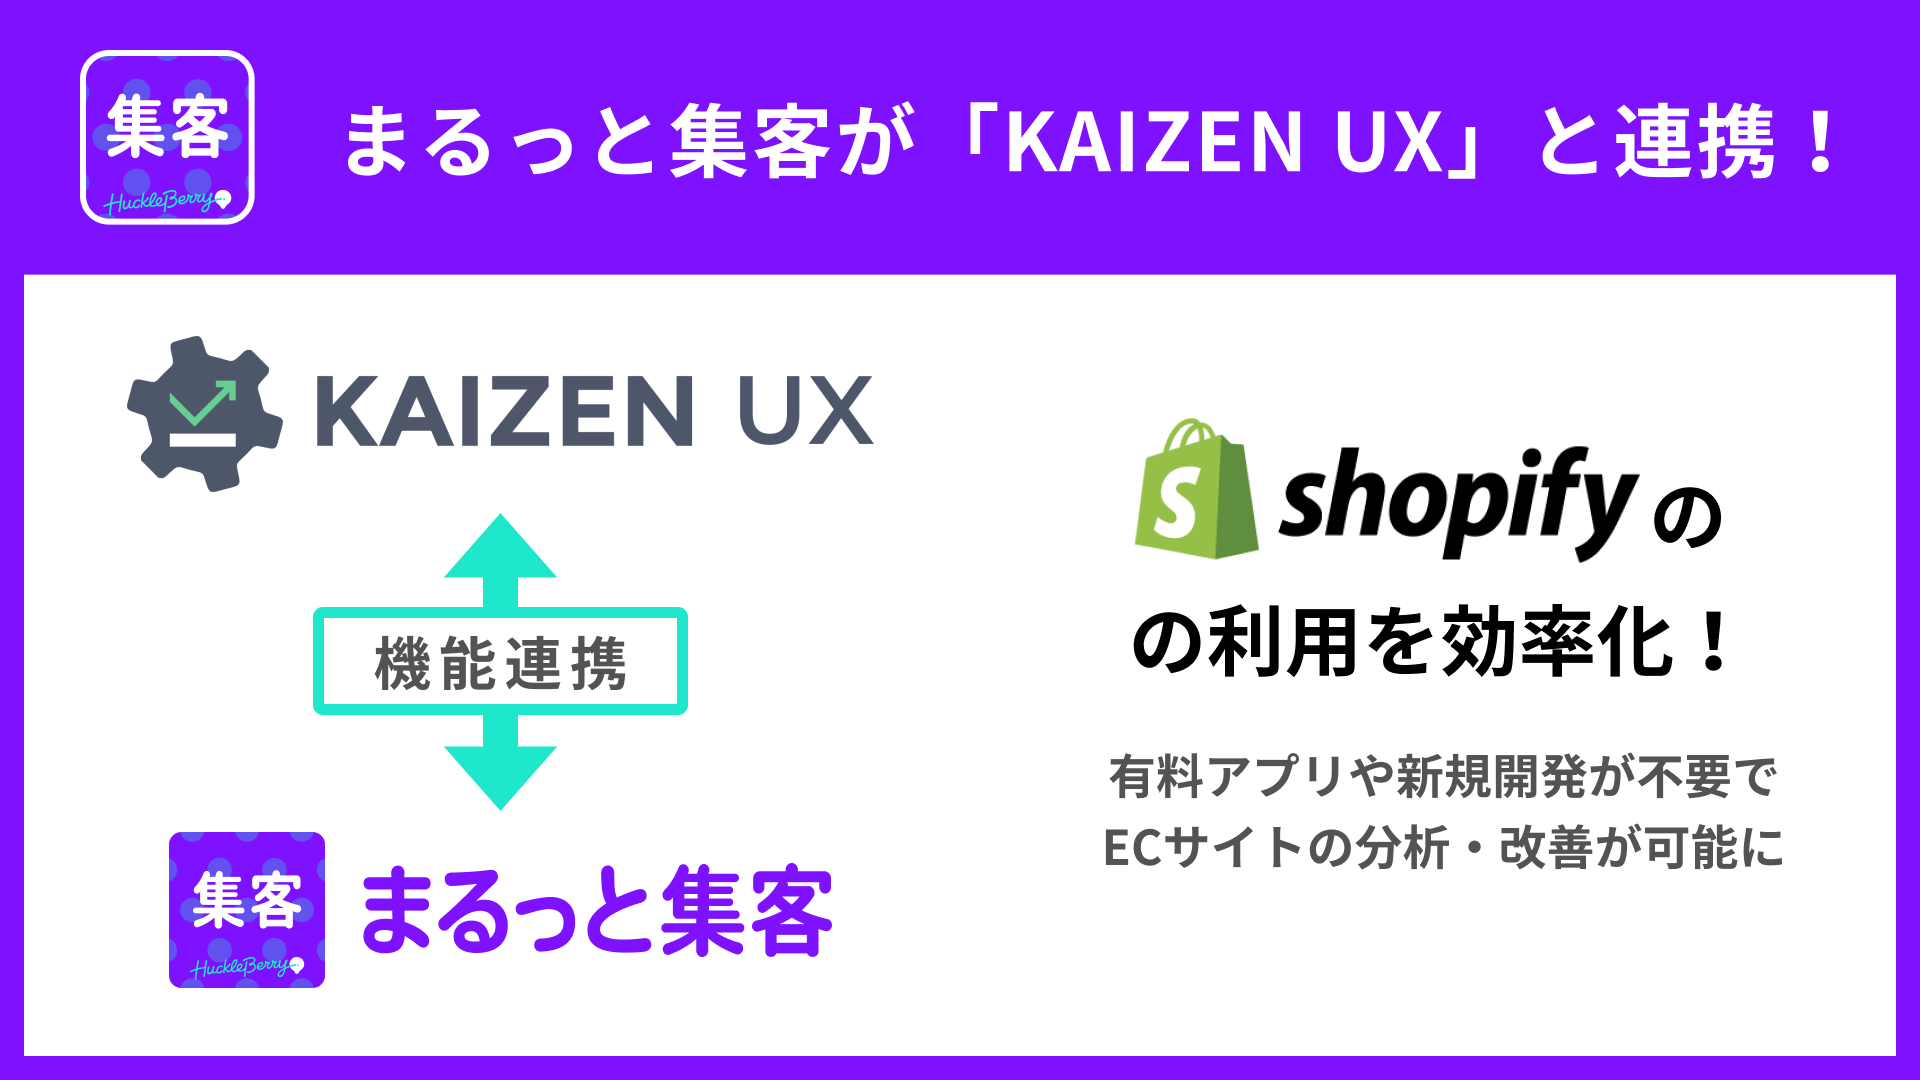 Shopifyアプリ まるっと集客 Kaizen Ux と機能連携を開始 株式会社ハックルベリーのプレスリリース